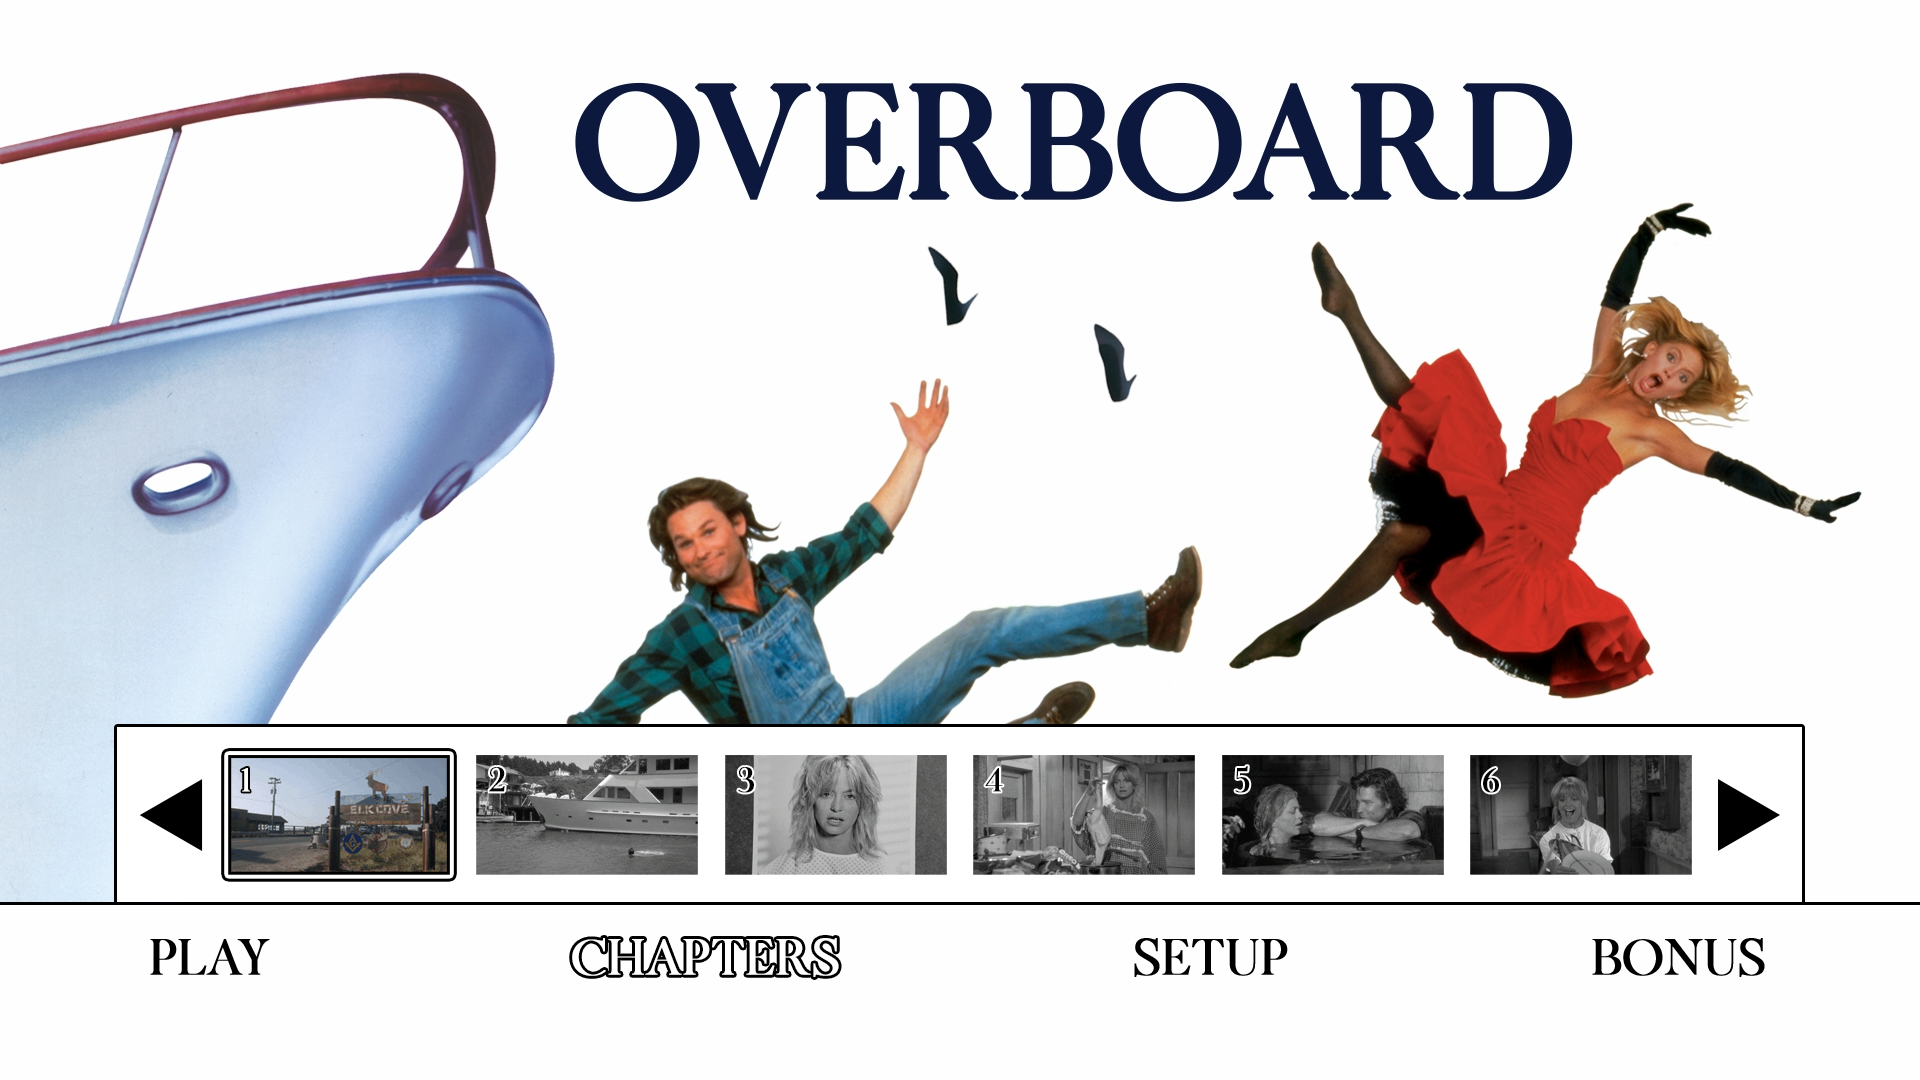 Overboard scene select menu